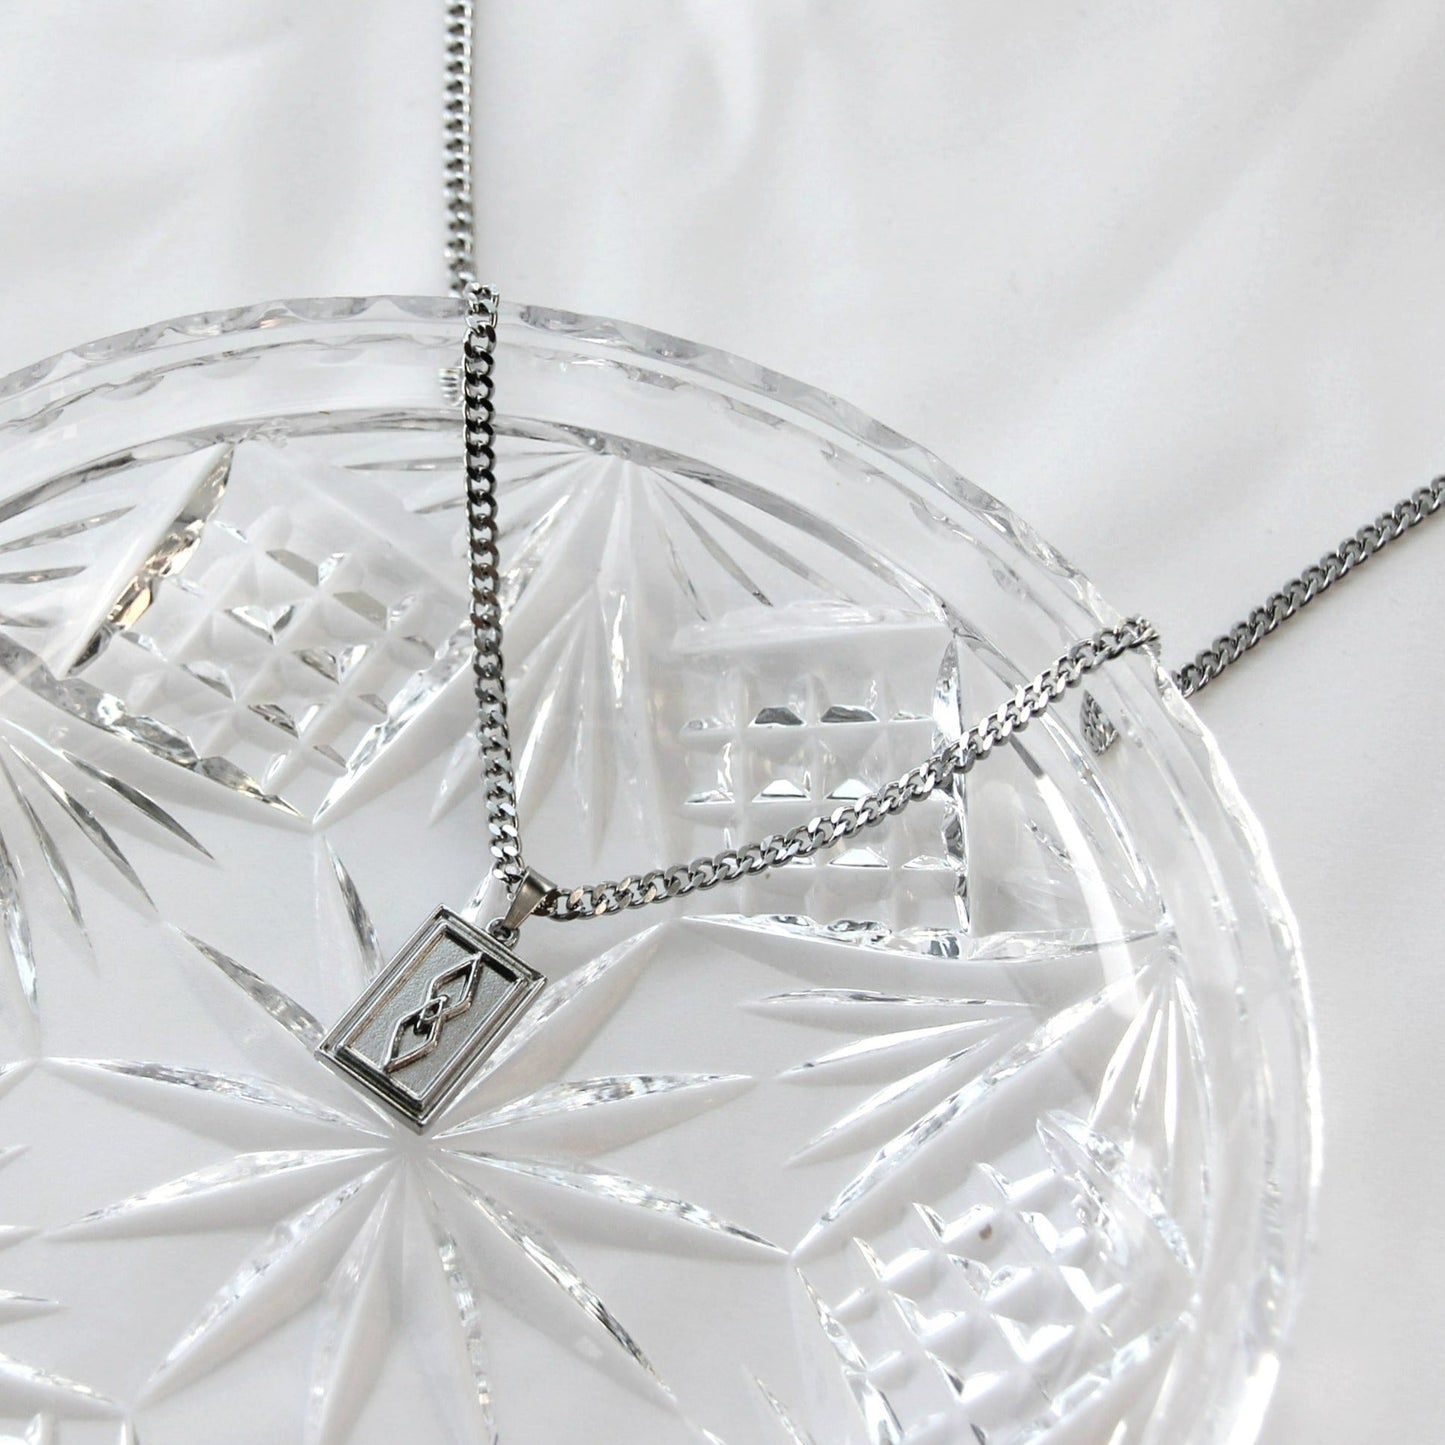 Silver Rectangle Pendant Necklace 3mm Curb Chain For Men or Women - Necklace - Boutique Wear RENN